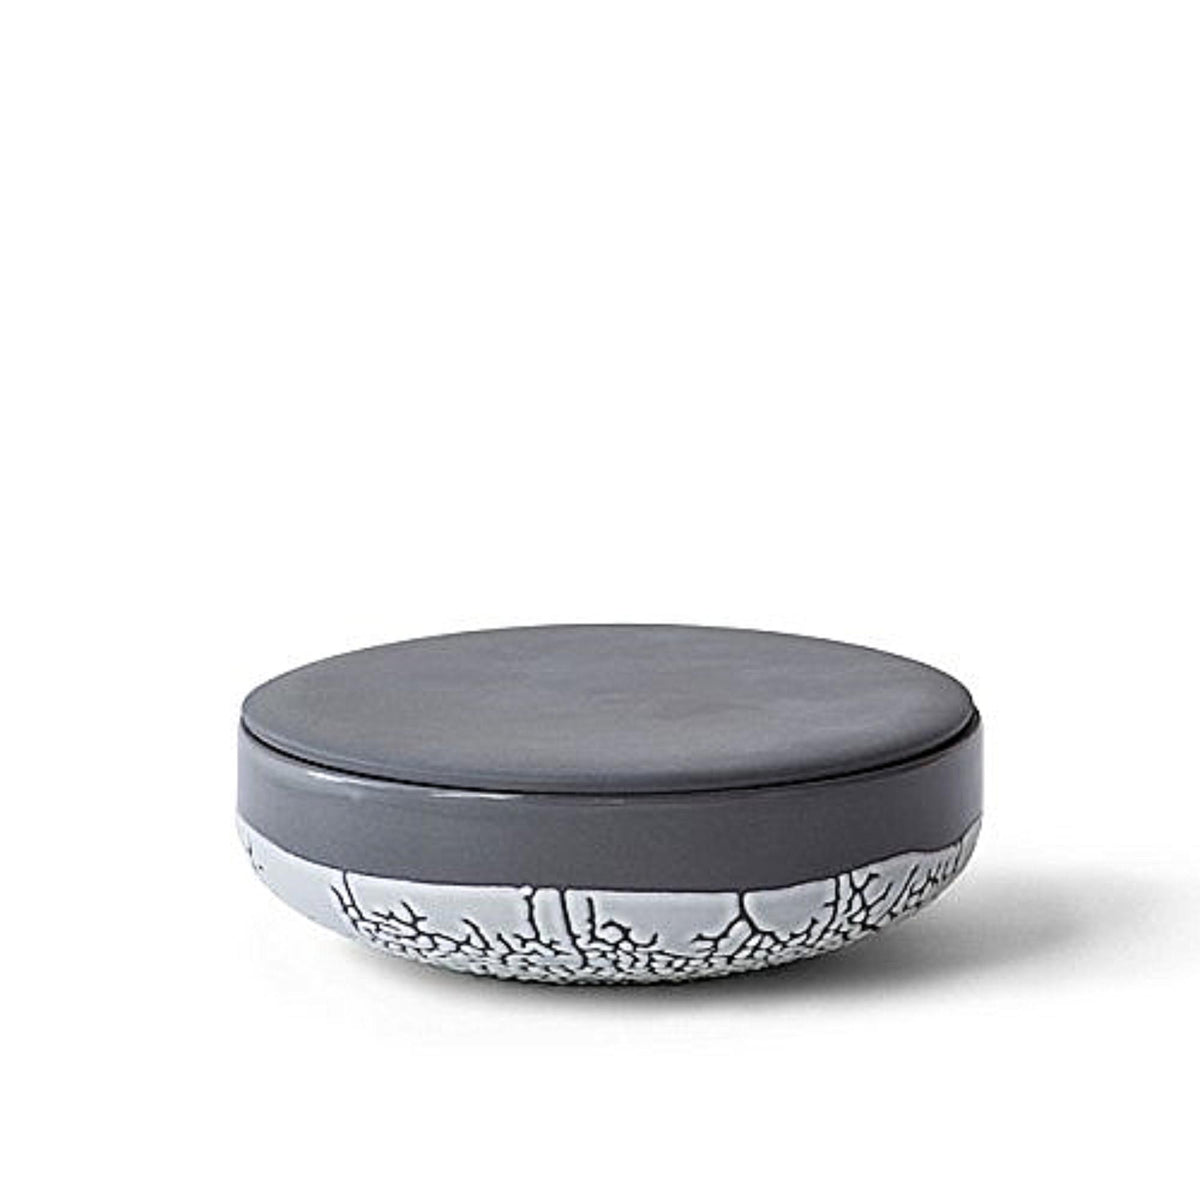 HOSLEY®  Ceramic Lichen Bowl / Box, Charcoal Grey Glazed, 5.5 inches Diameter